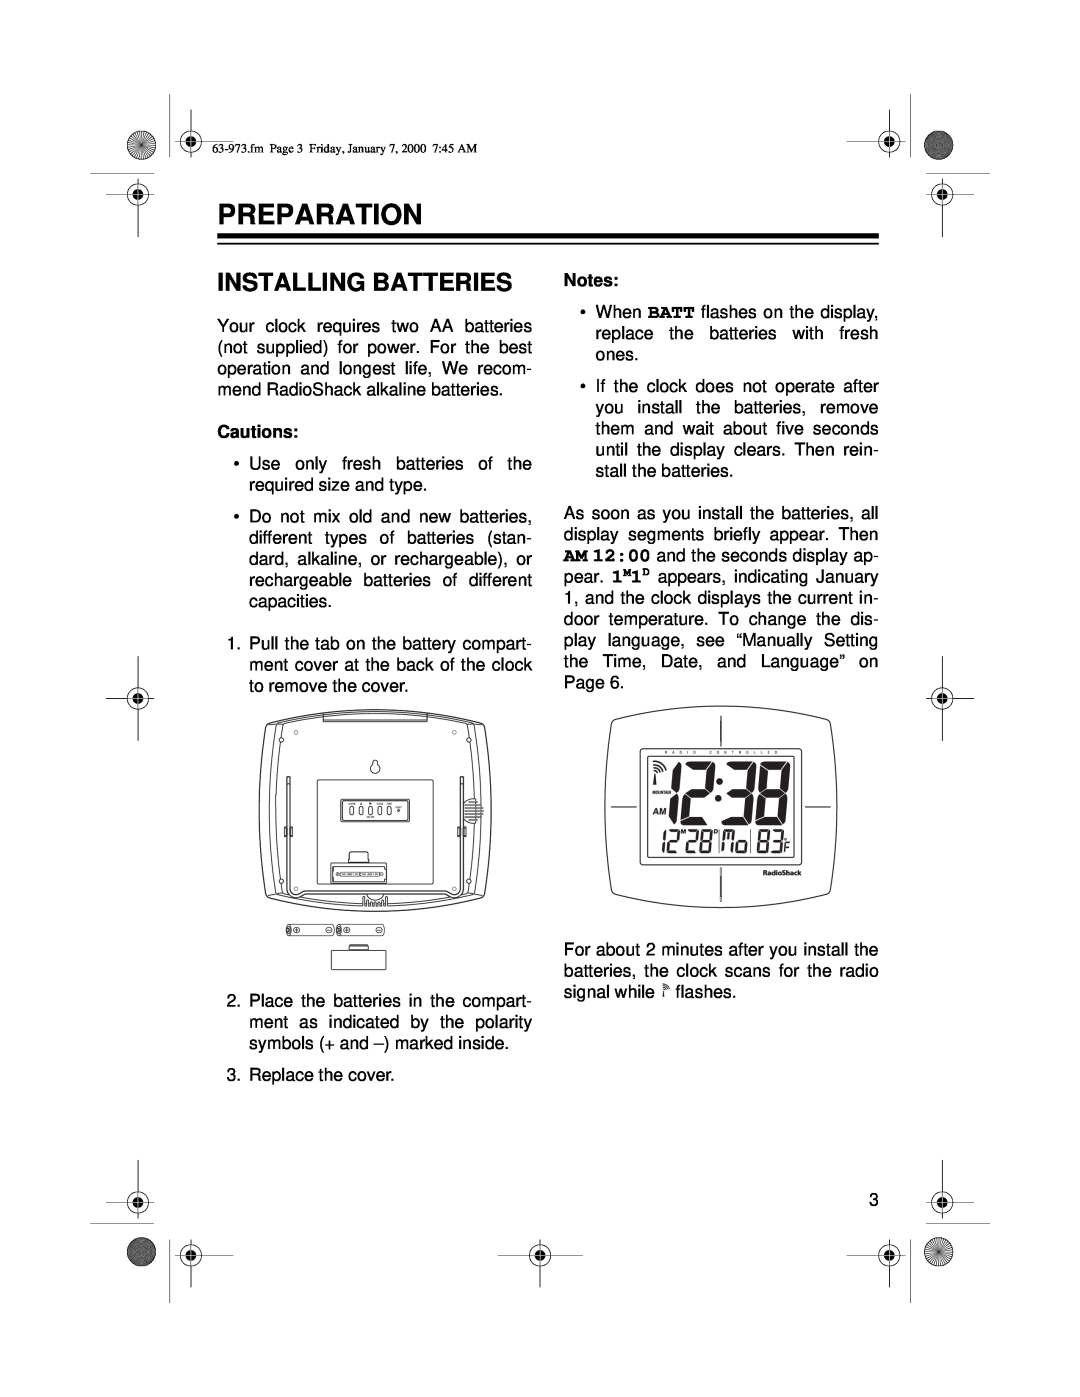 Radio Shack 63-973 owner manual Preparation, Installing Batteries, Cautions 